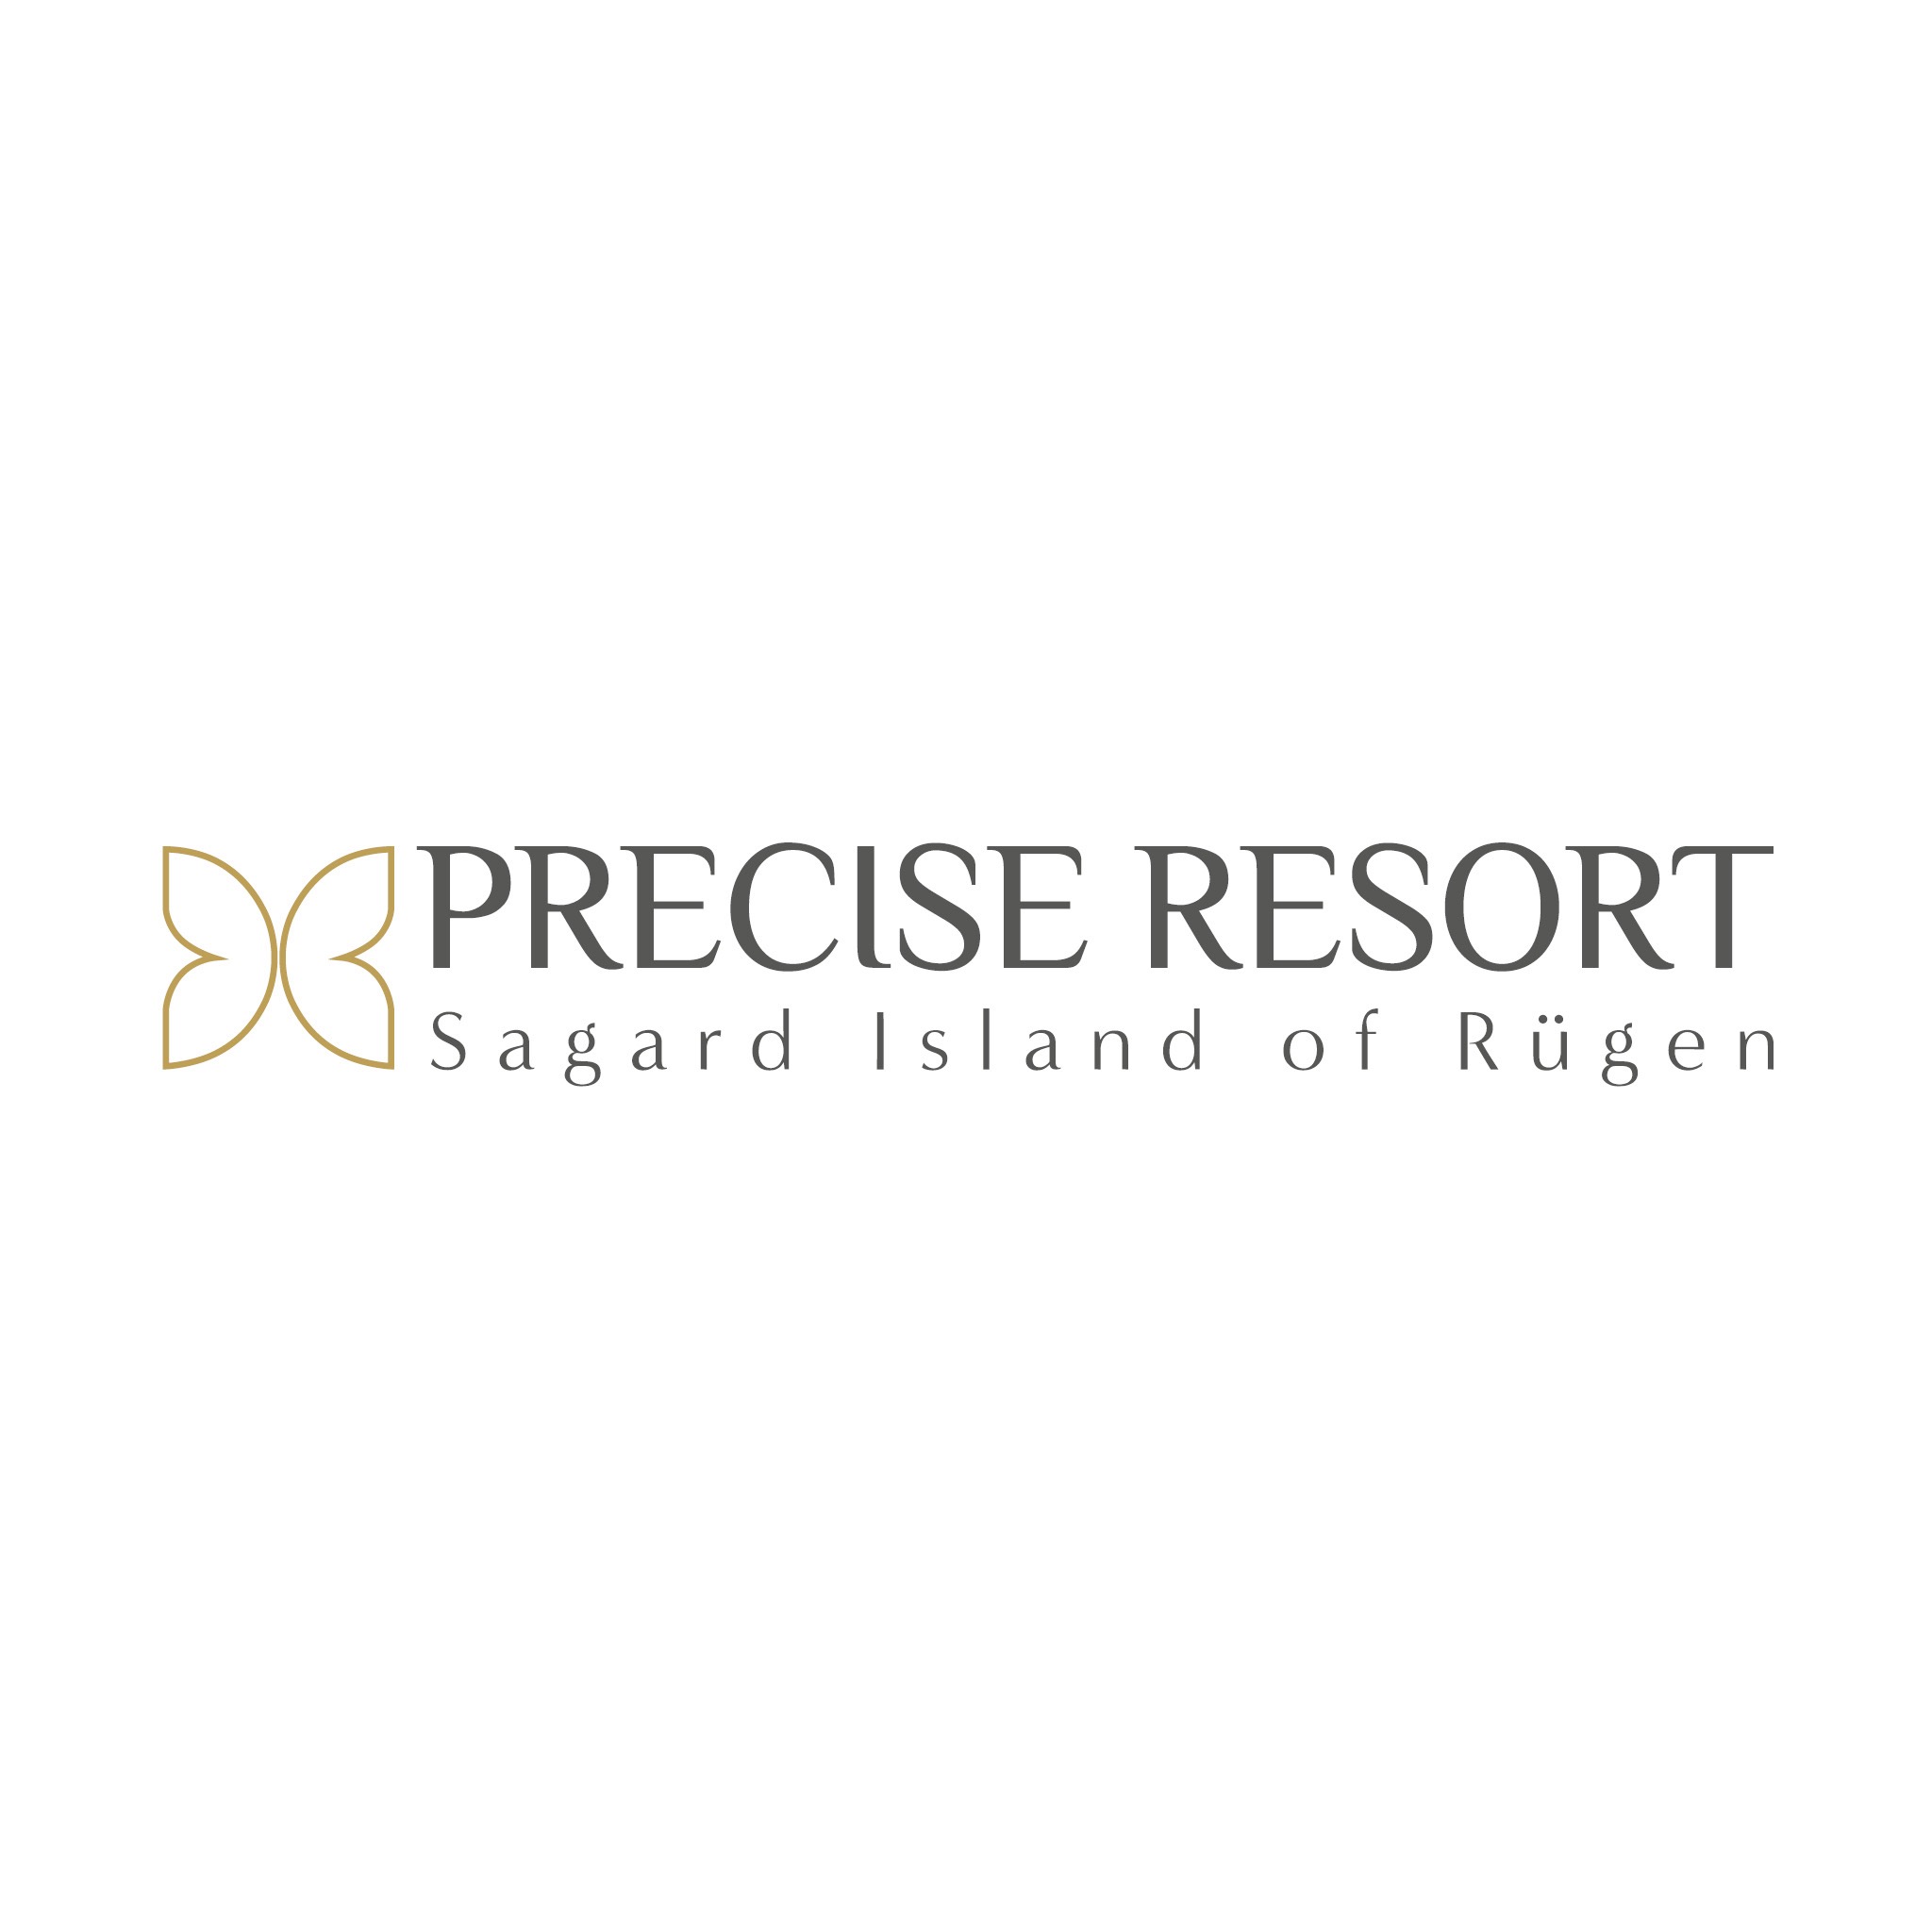 Logo Precise Resort Rügen